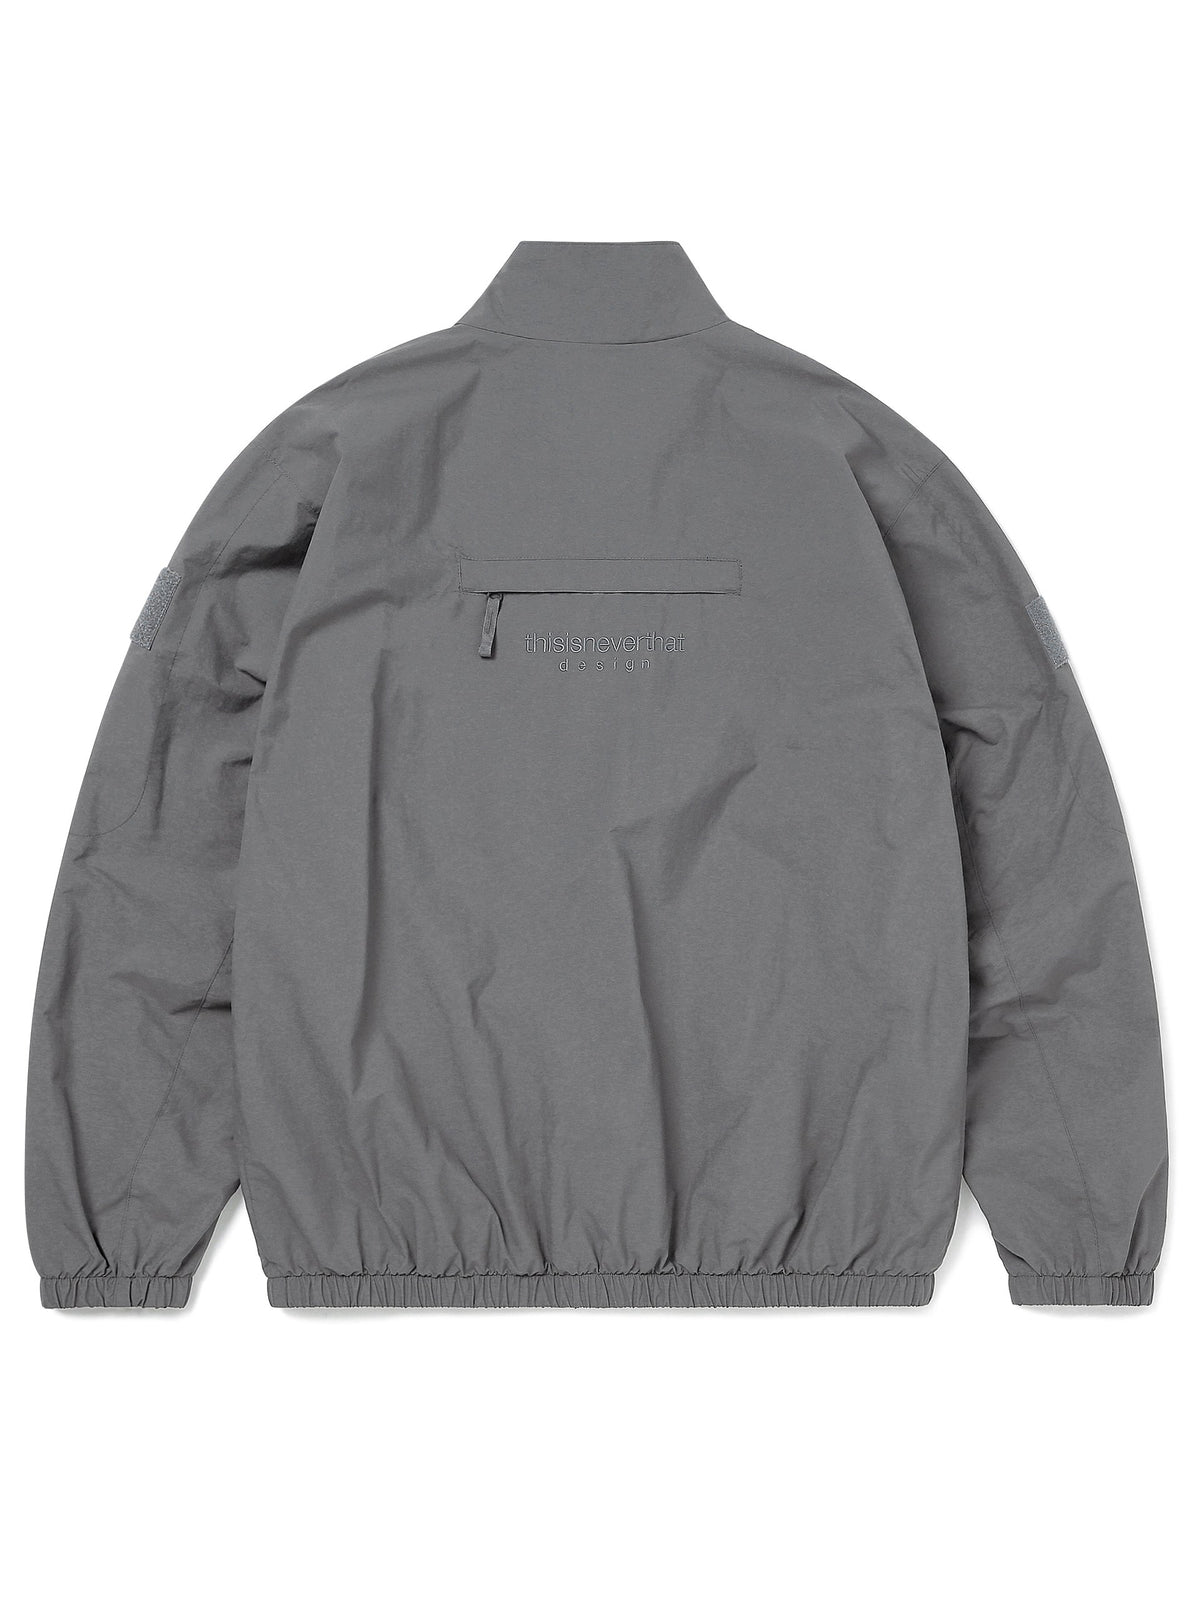 PERTEX® UL Jacket Outerwear 